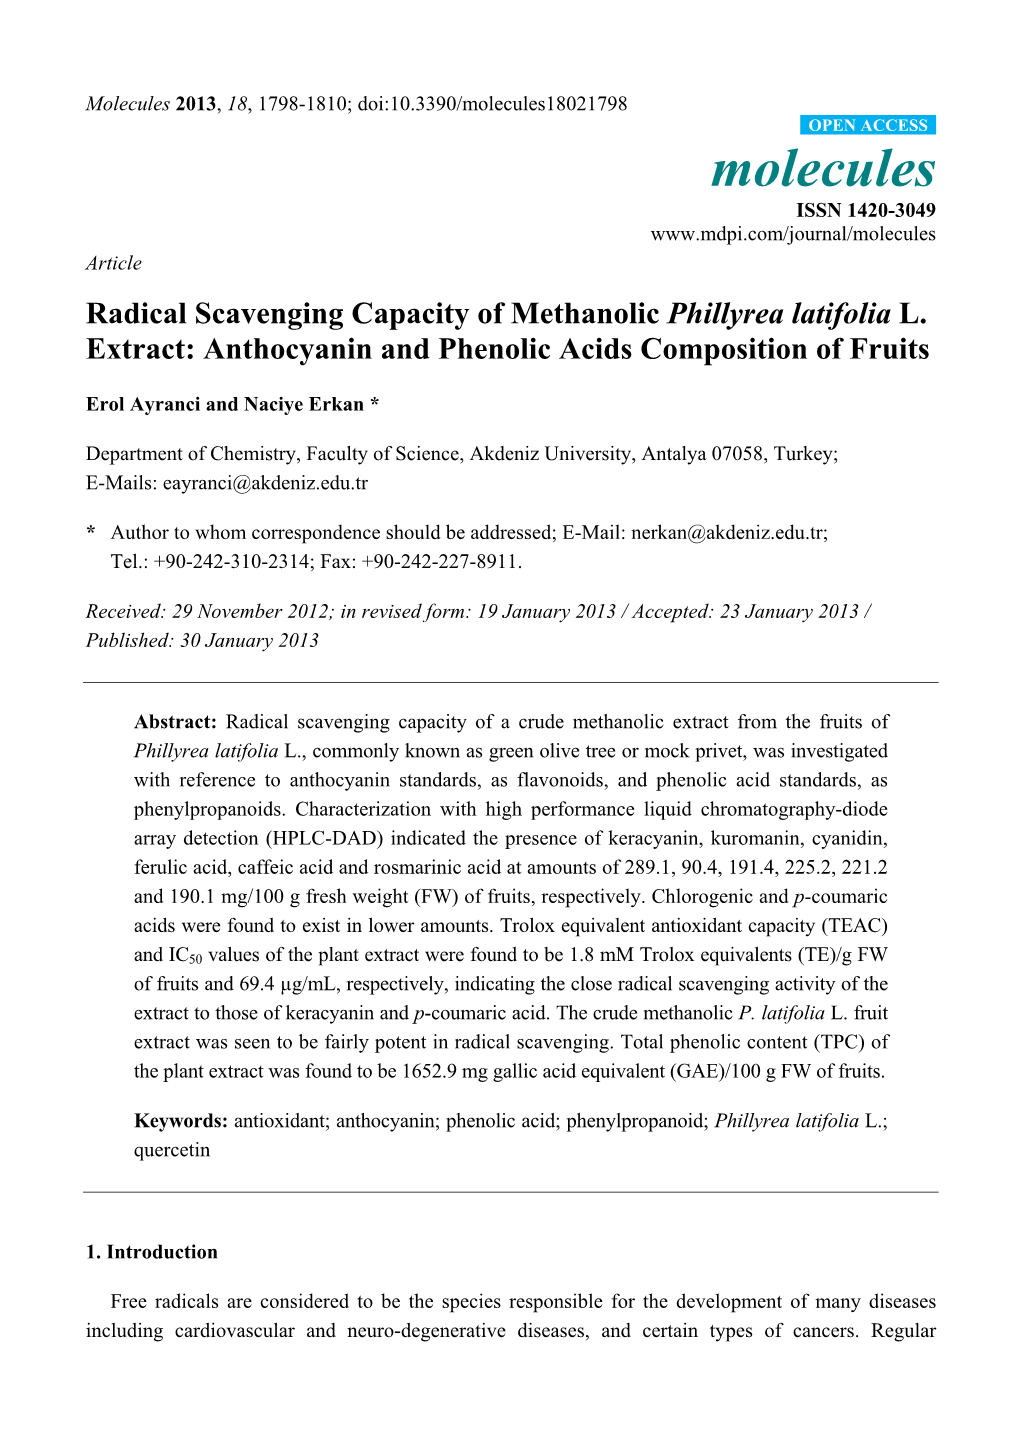 Radical Scavenging Capacity of Methanolic Phillyrea Latifolia L